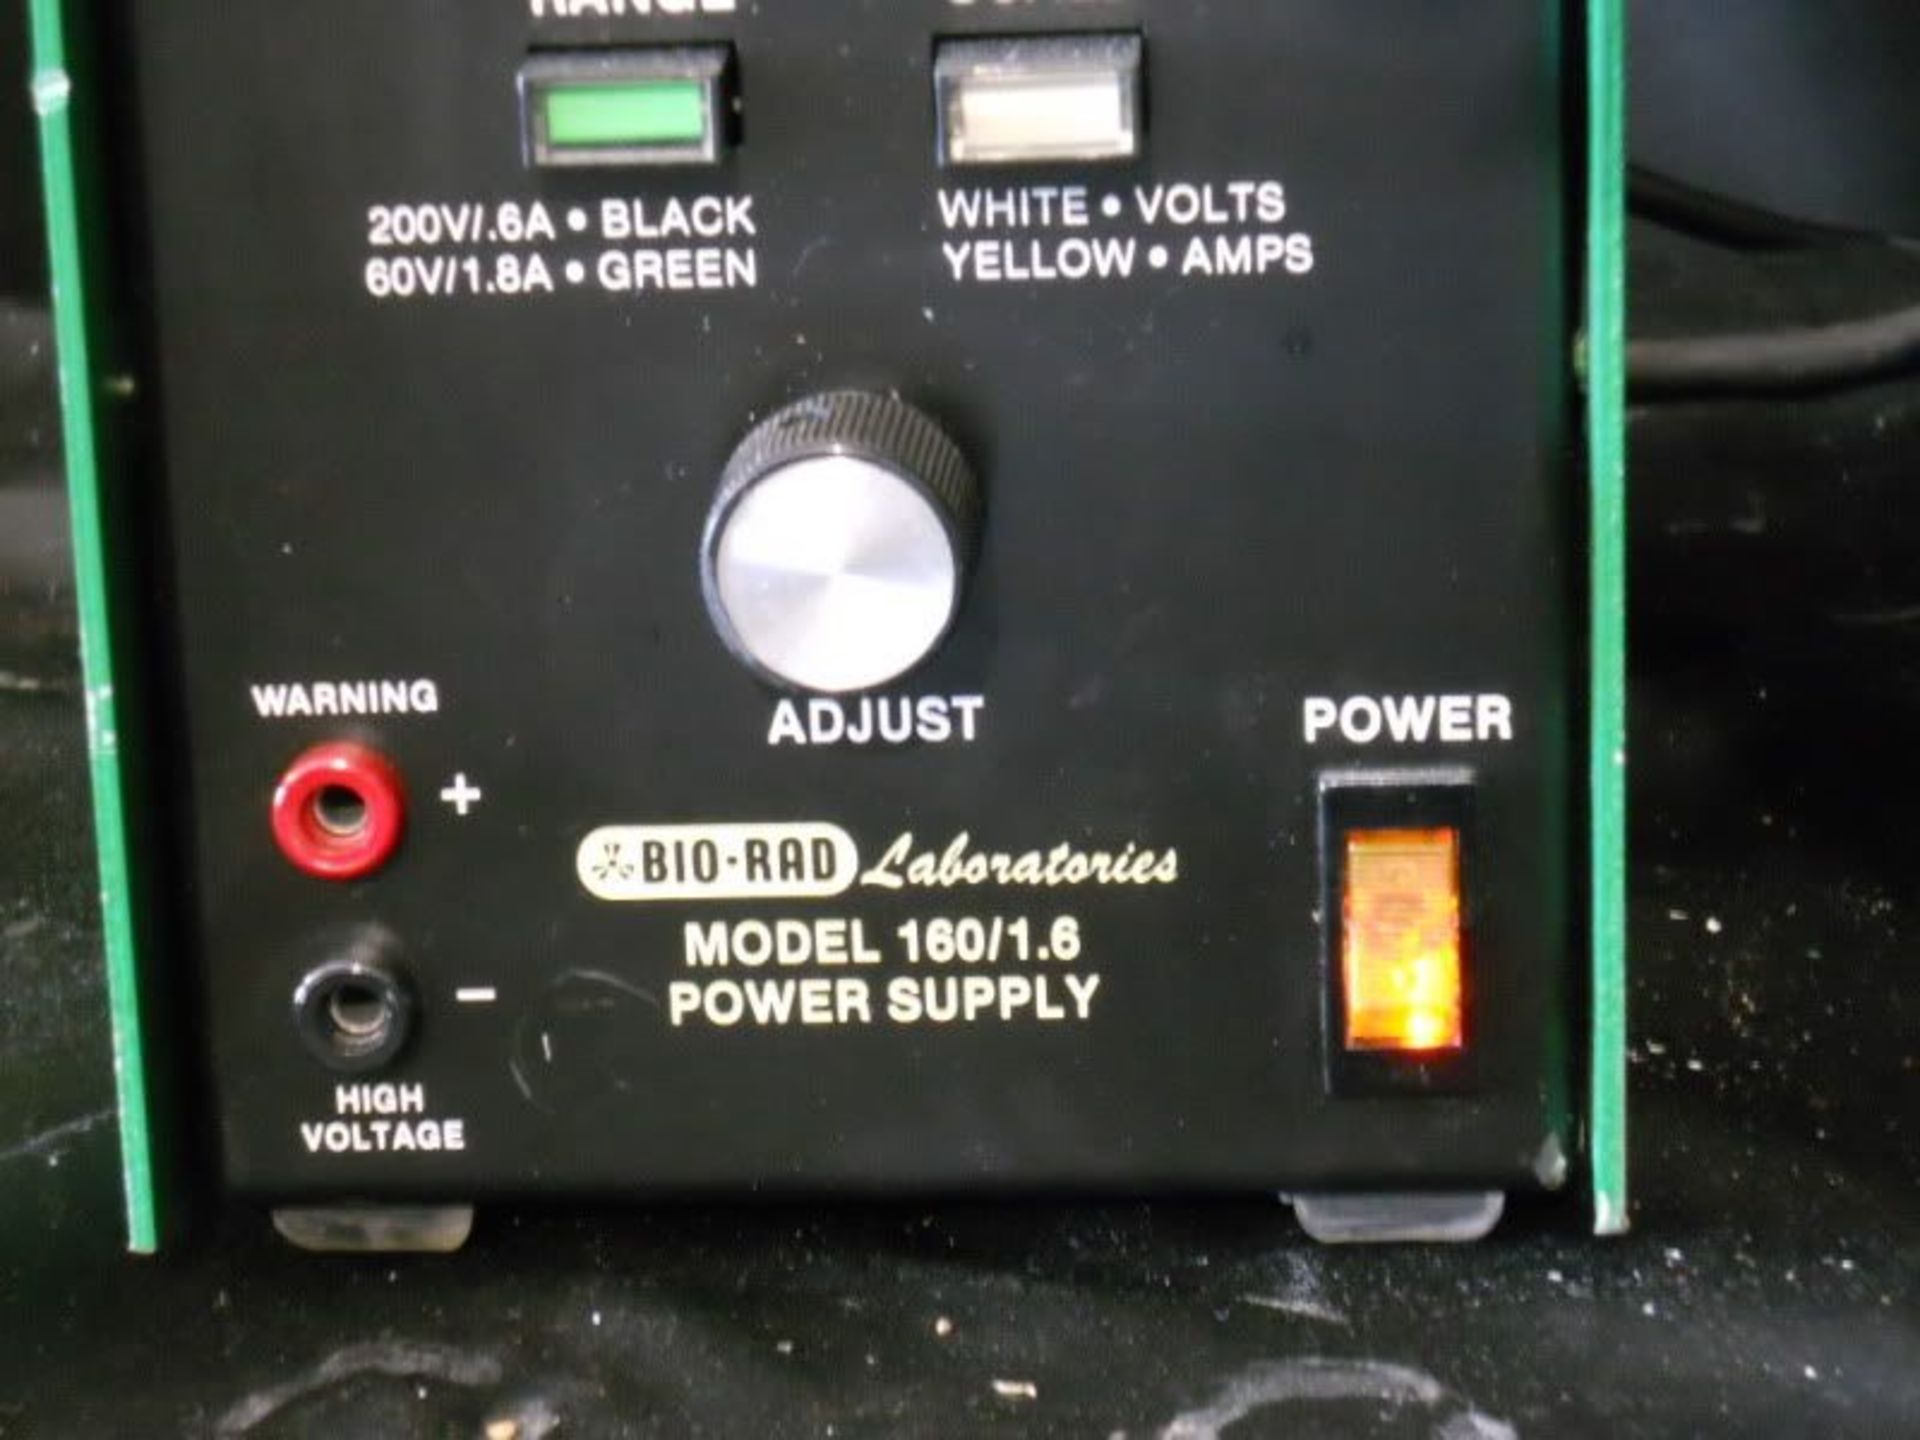 BioRad Model 160/1.6 Electrophoresis Power Supply, Qty 1, 320876956979 - Image 4 of 7